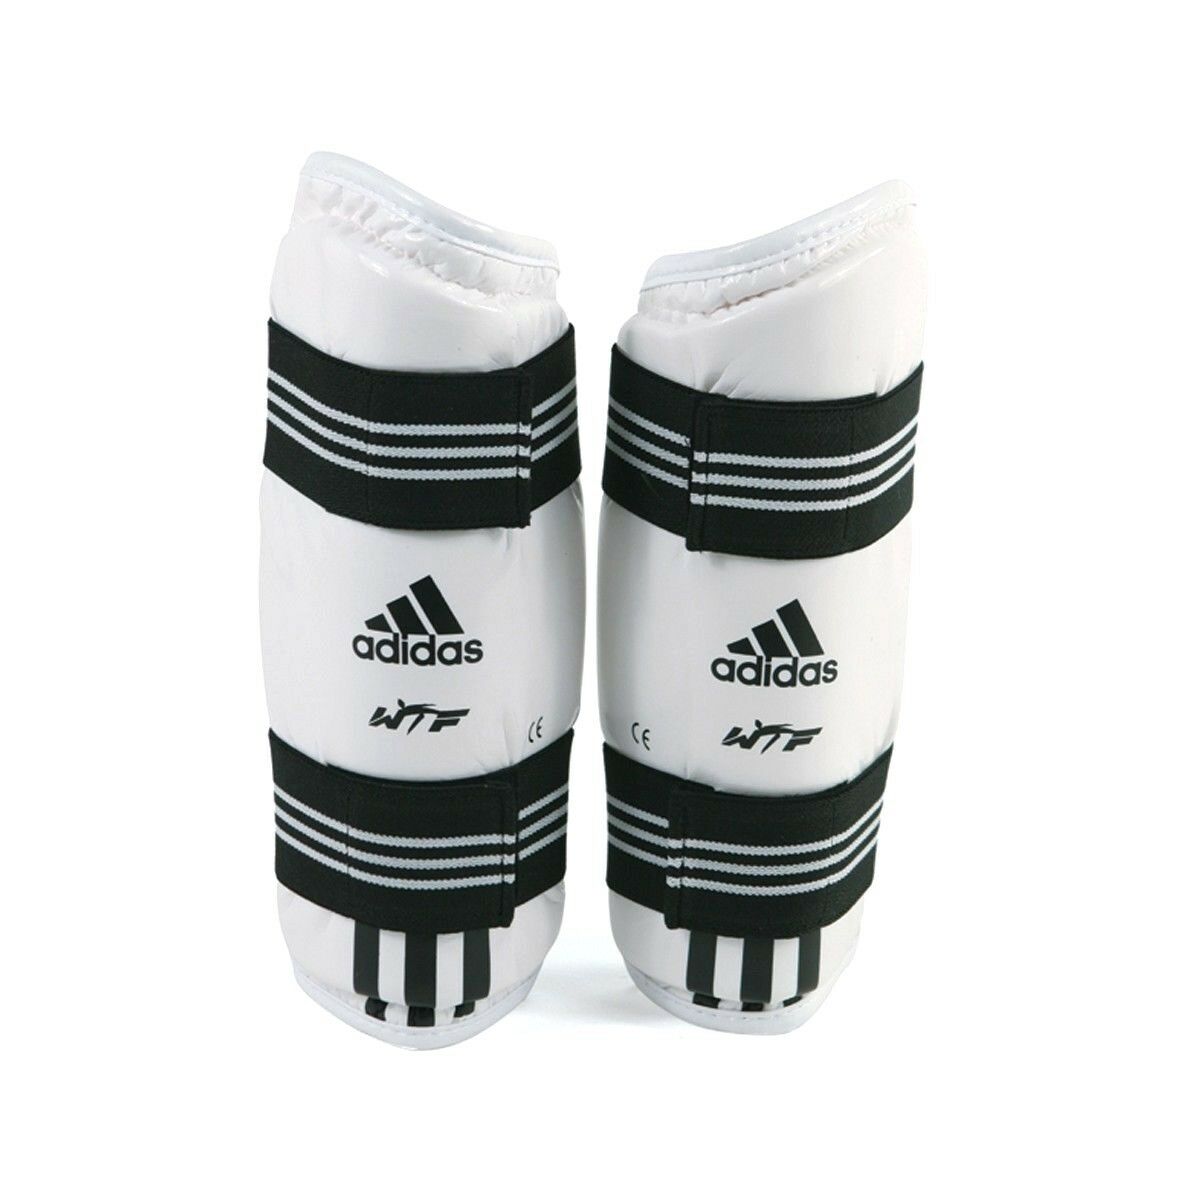 Adidas Taekwondo Forearm Protector Karate Arm Guard Mma Taekwondo Sparring Gear